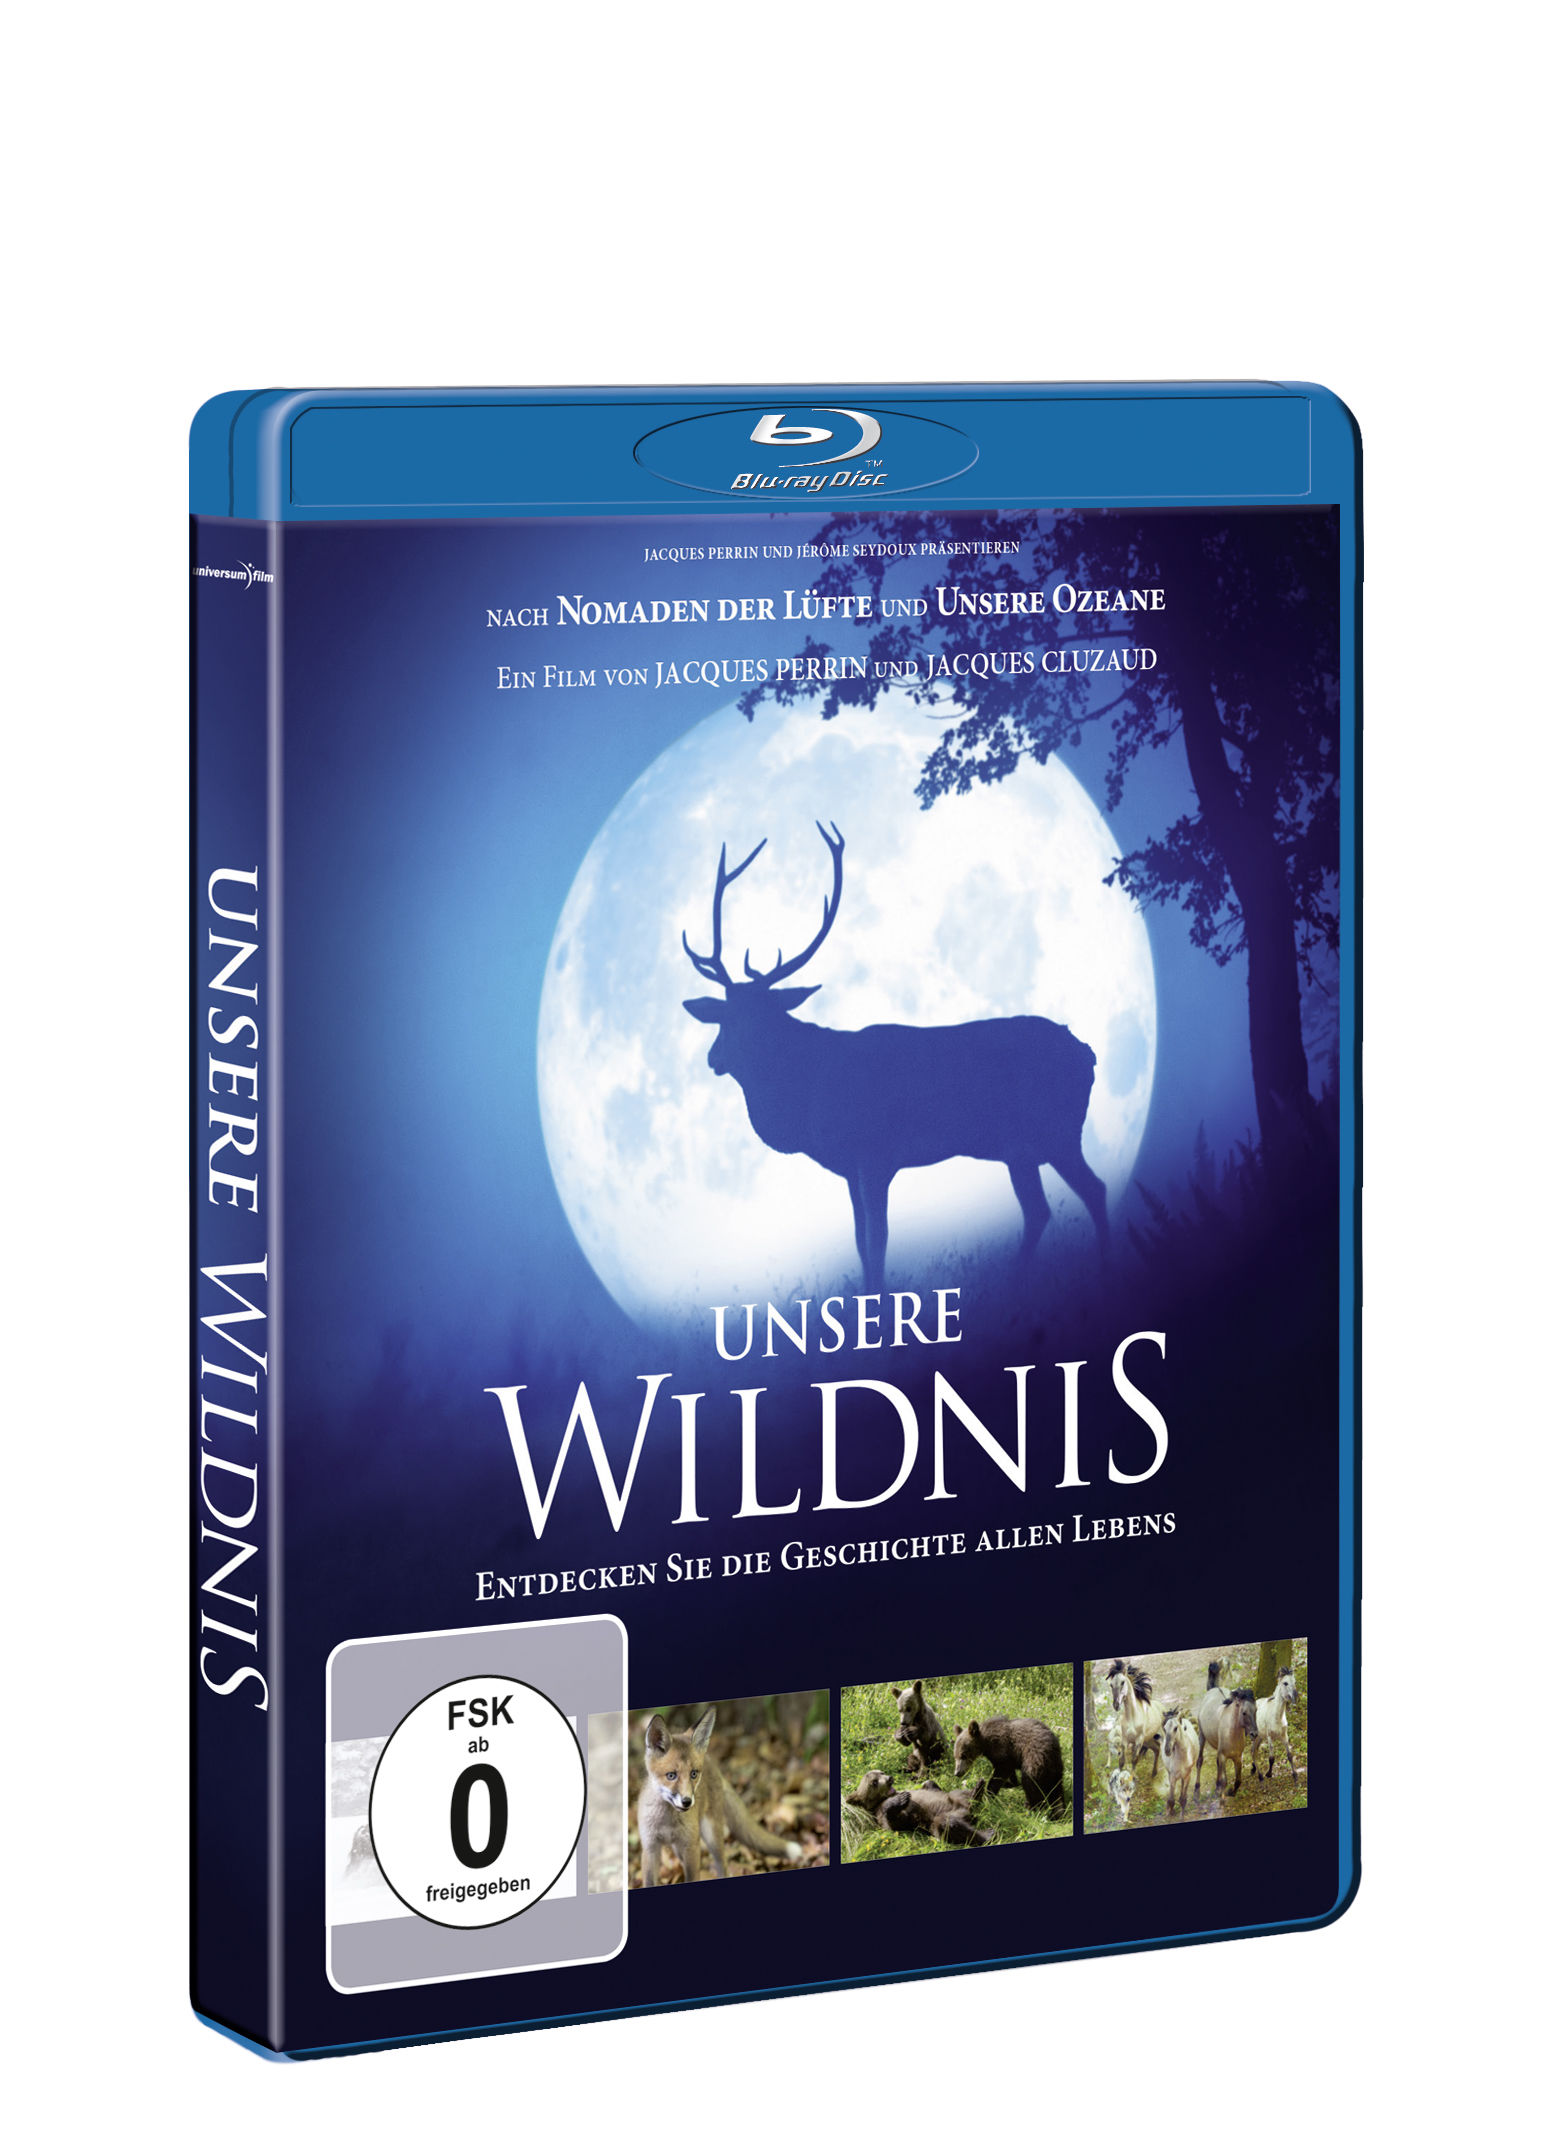 Blu-ray Wildnis Unsere